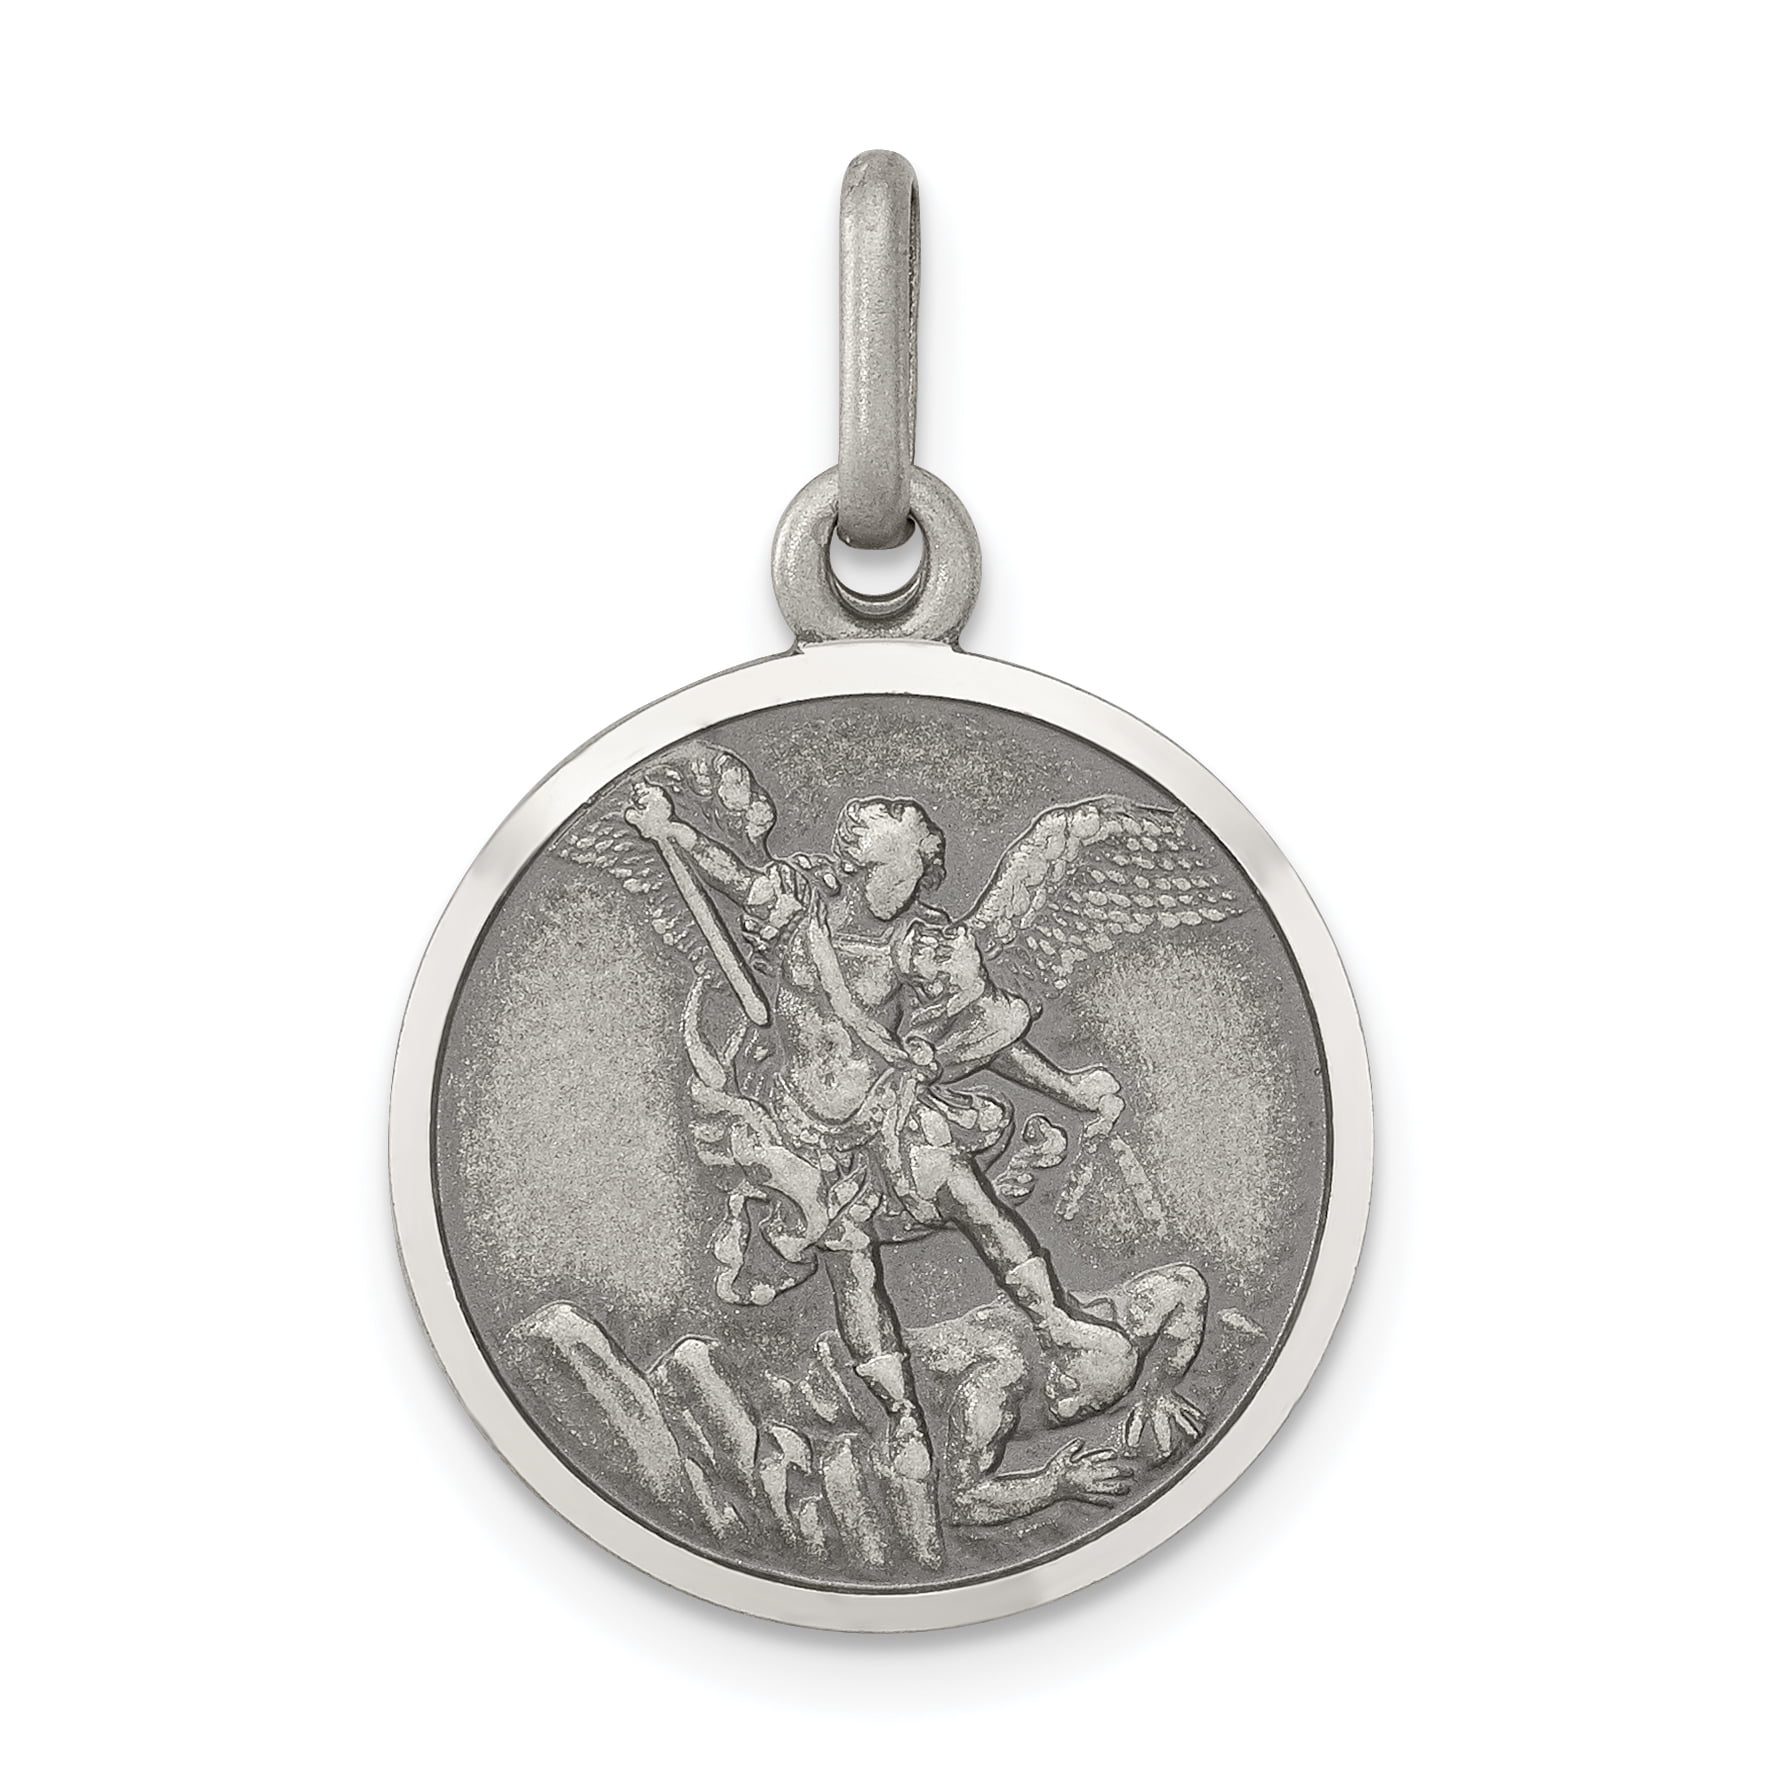 The Patrons Saints Medals 925 Sterling Silver Saint Michael The Archangel Medal 